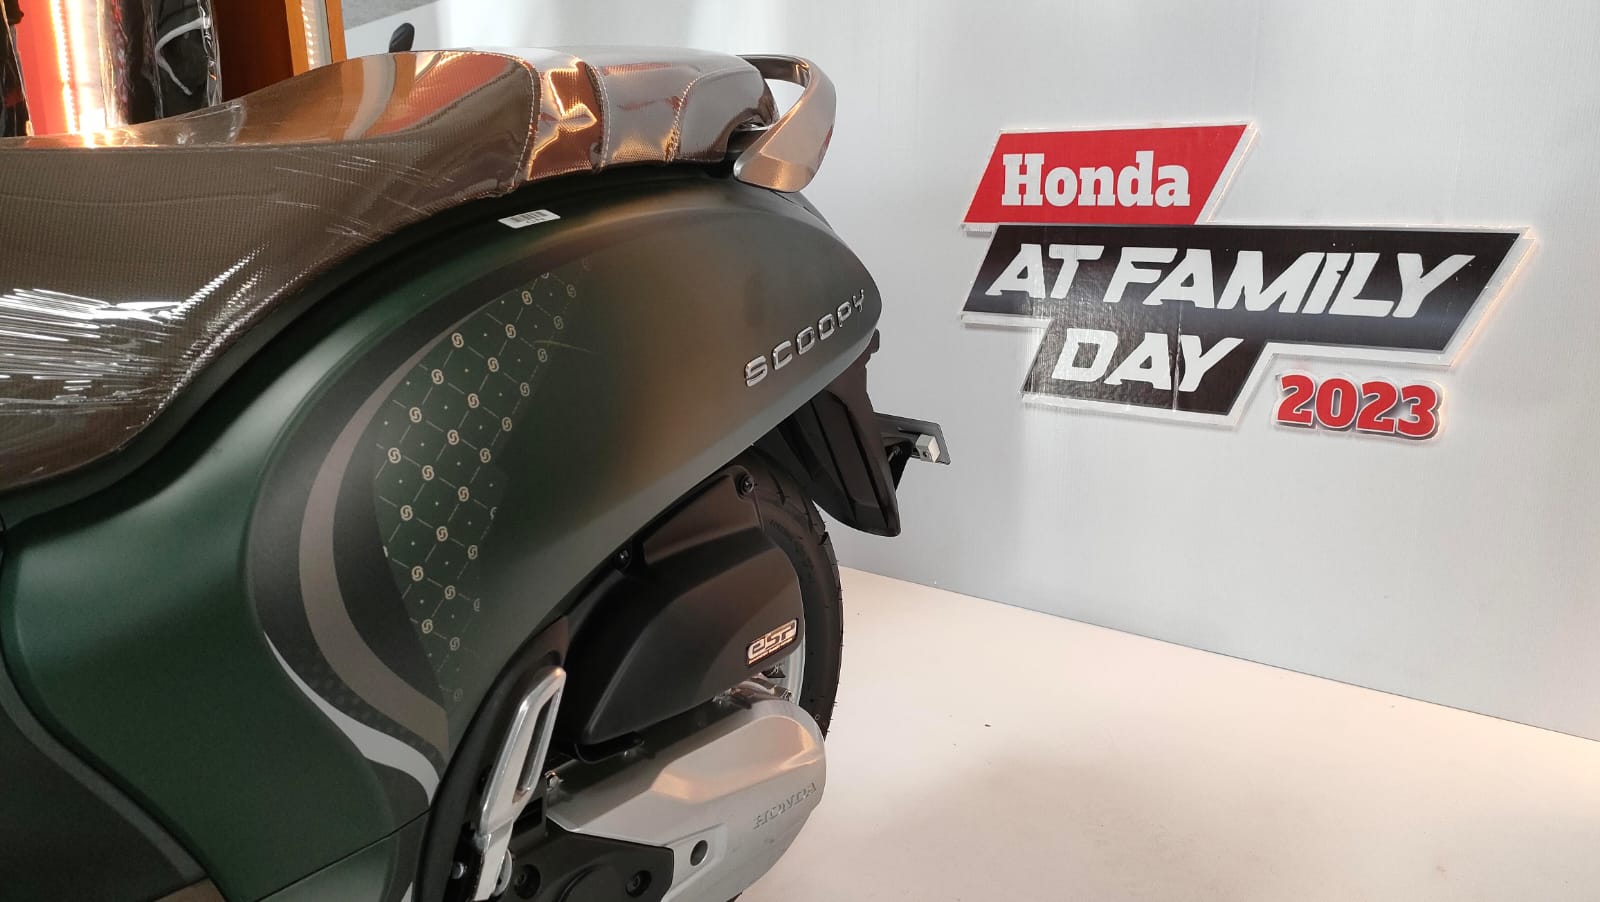 Honda AT Family Day 2023, Astra Motor Jateng Massifkan Program Garansi Rangka 5 Tahun Semua Jenis Motor